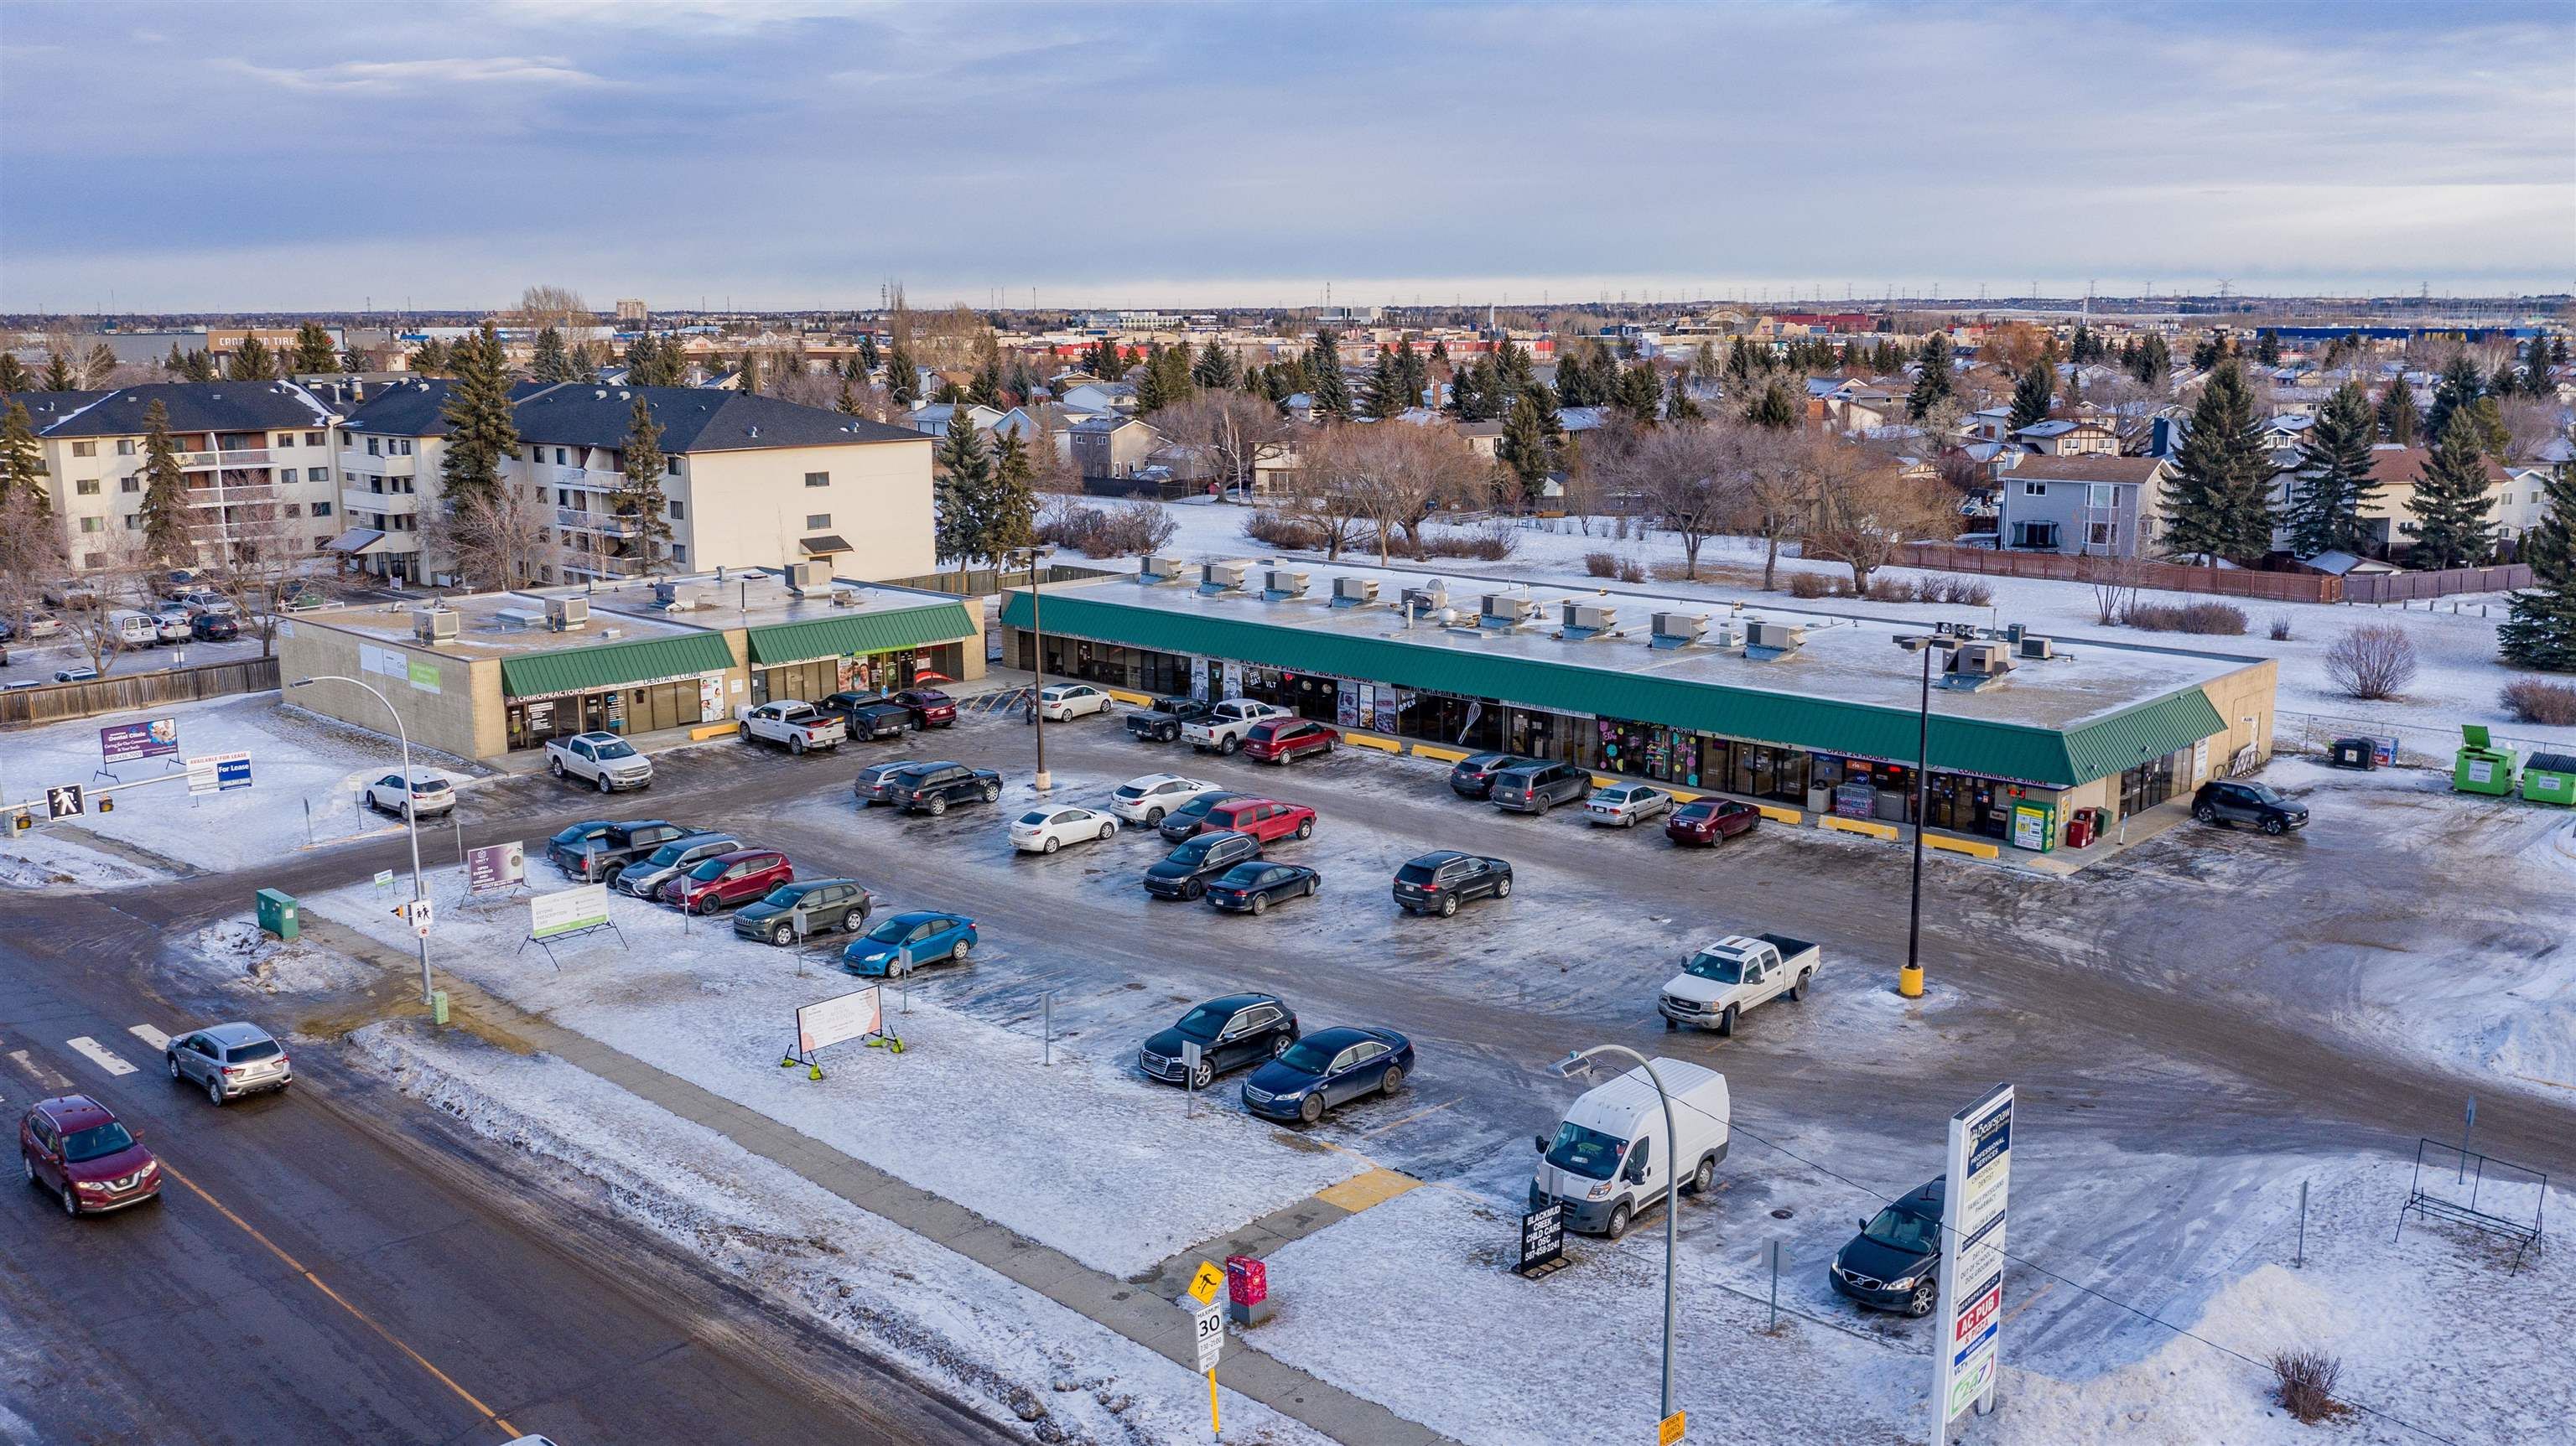 Main Photo: 1903 105 Street NW in Edmonton: Zone 16 Retail for lease : MLS®# E4271657